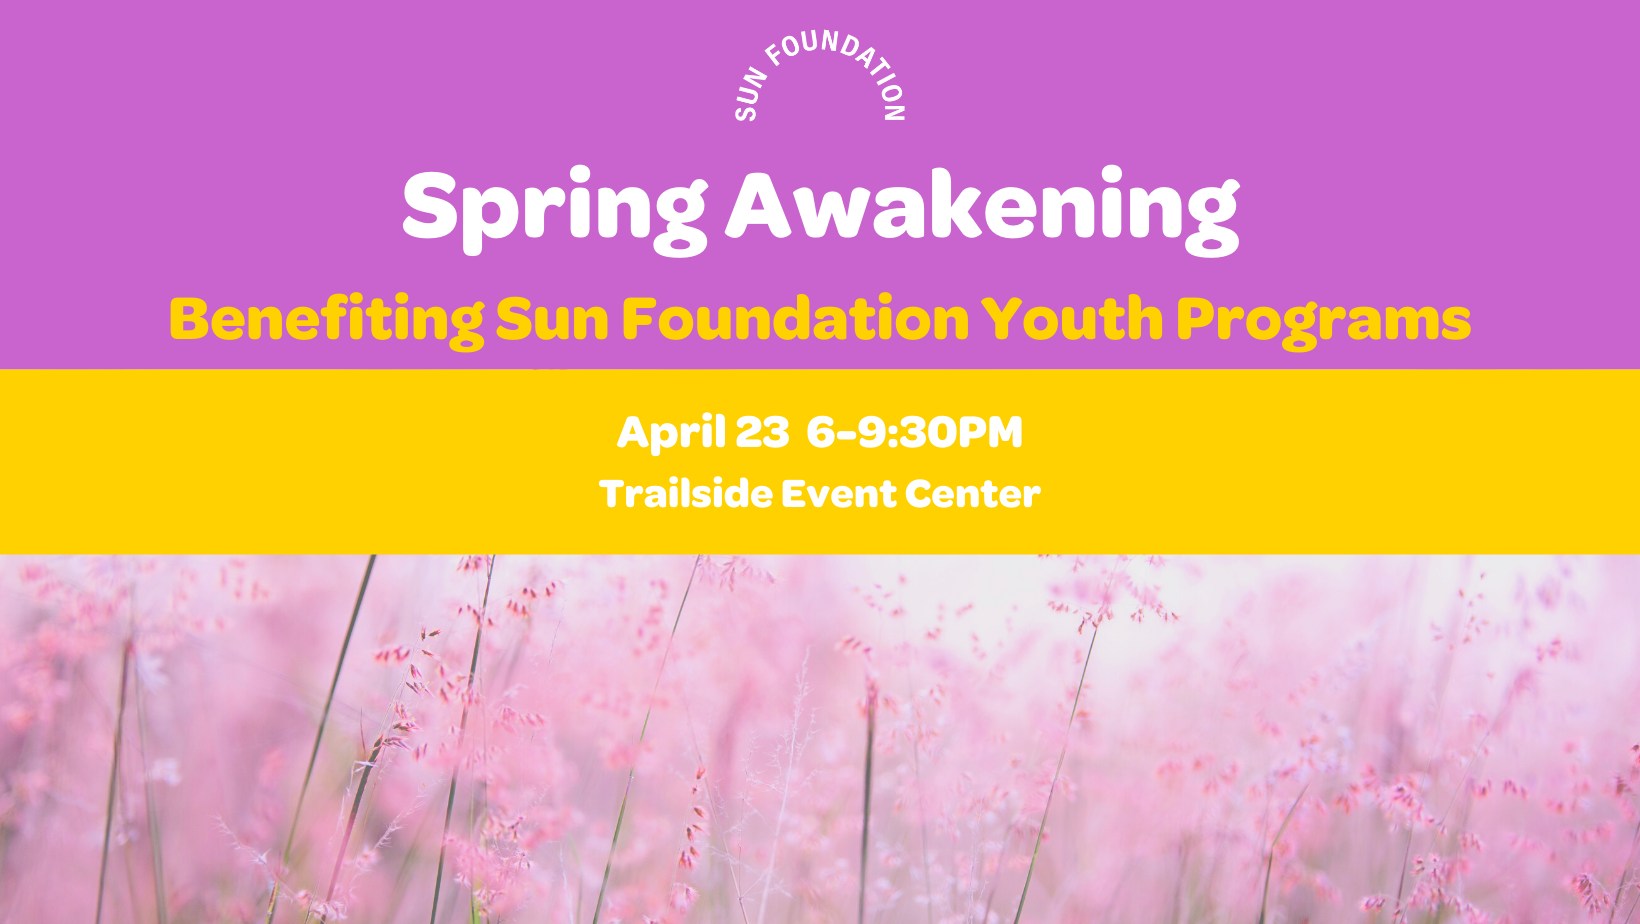 Sun Foundation - Spring Awakening 2022